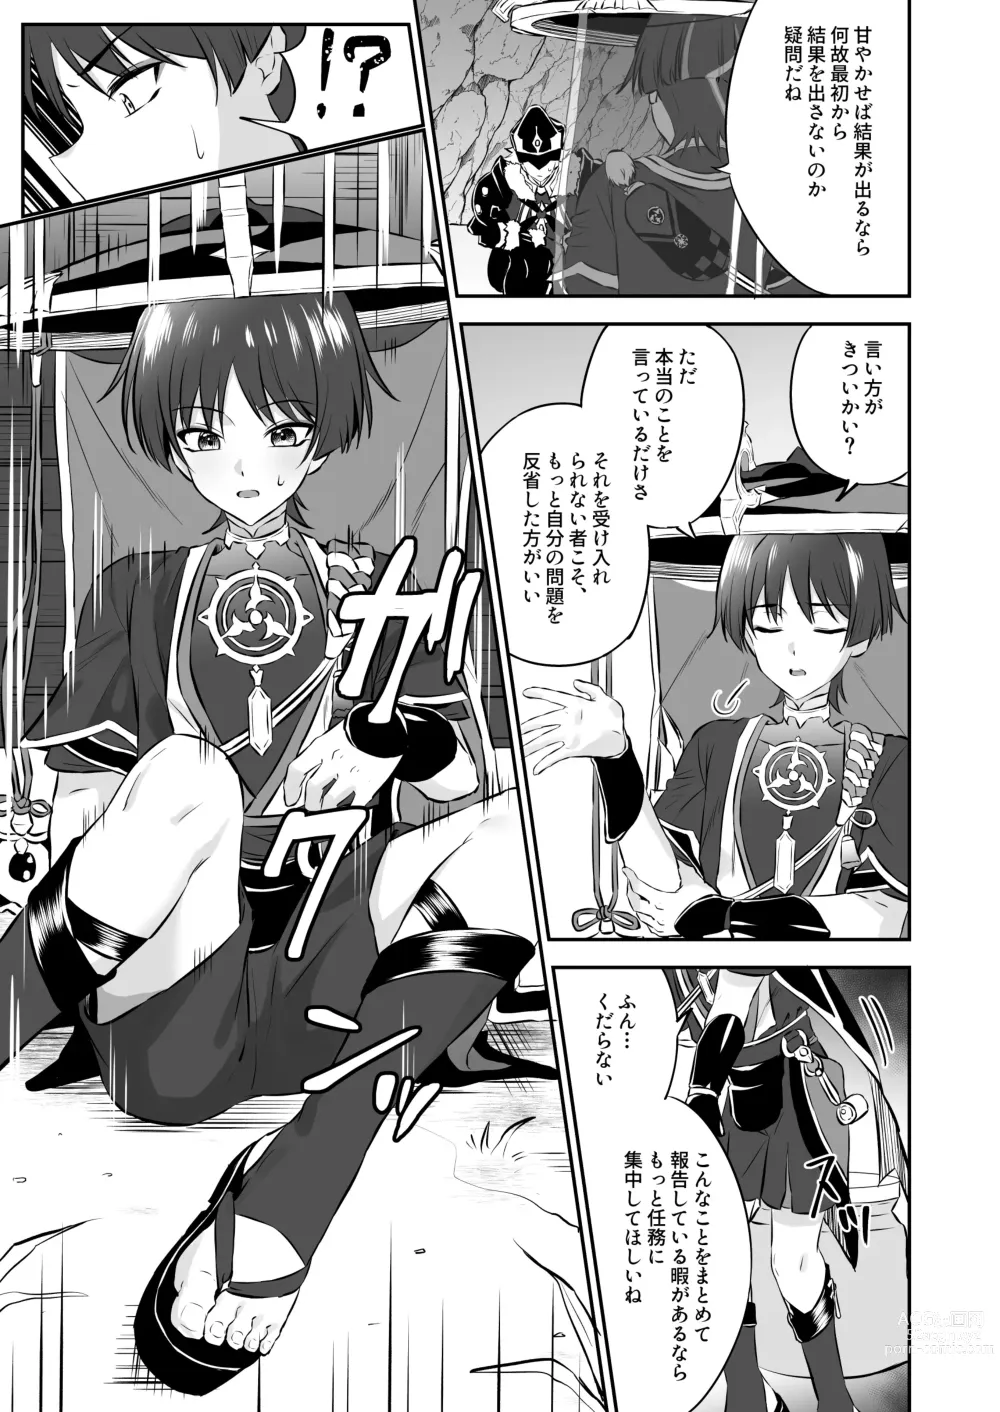 Page 5 of doujinshi 【3月新刊】散兵様が薬盛られたからってモブファデュイたちに好き勝手されるわけないだろ